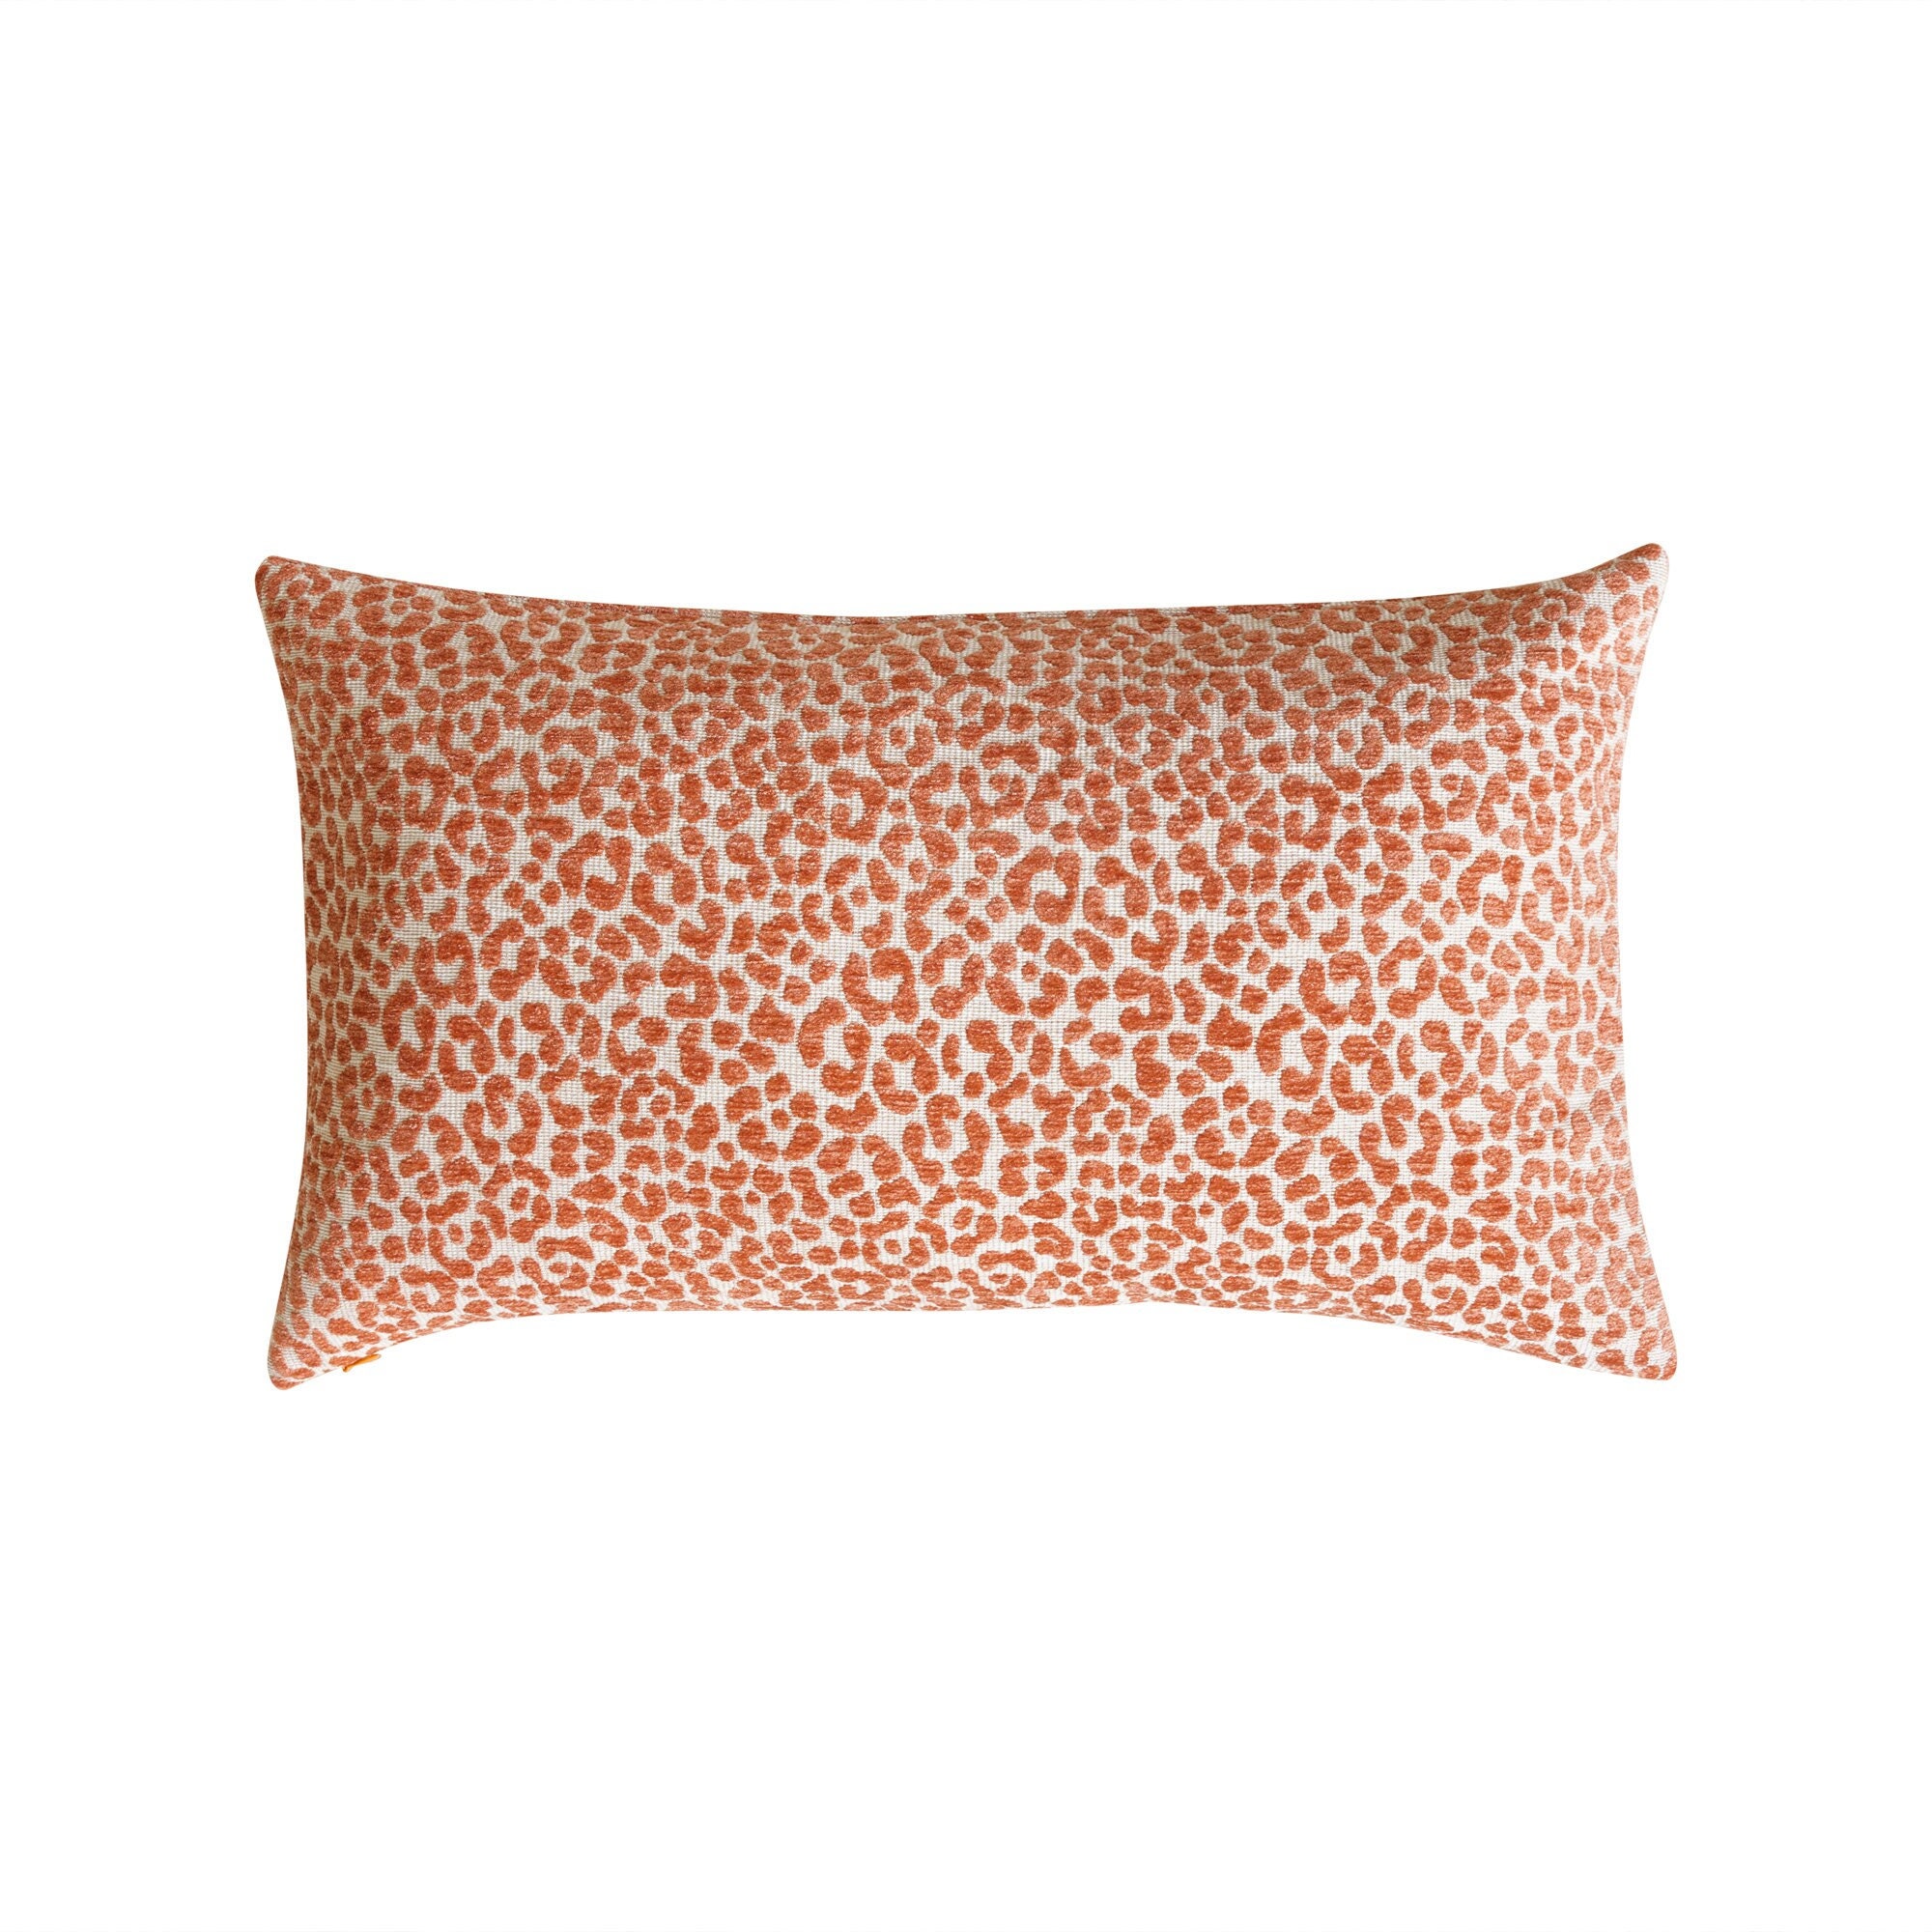 red-leopard-print-table-runner — Posh Pillows